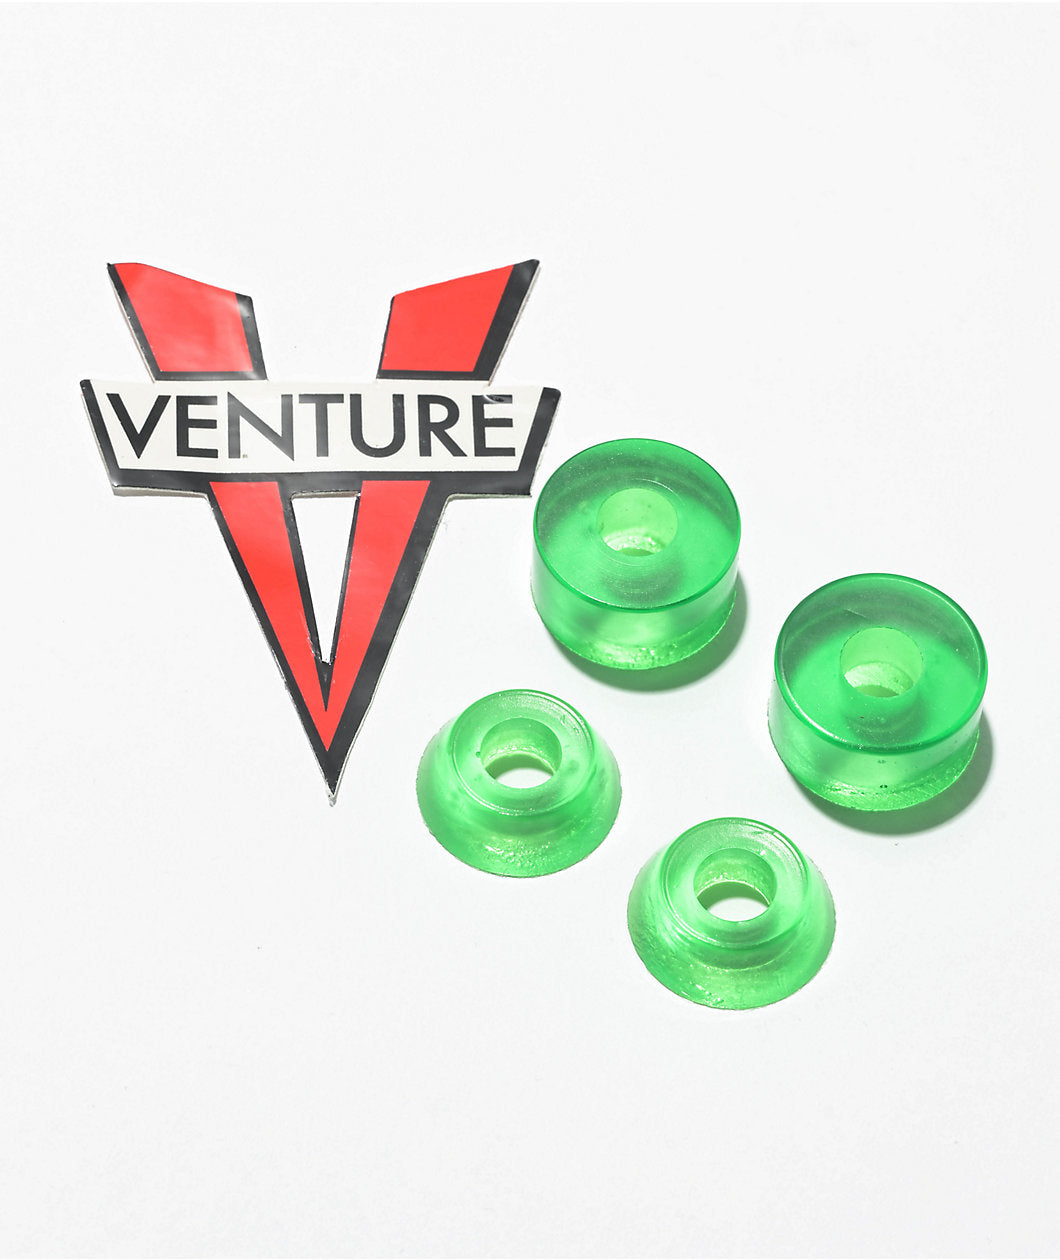 Venture Conversion kit - Venture Loose Trucks Bushings 90A | Gomas / Bushings de Skate | Skate Parts | Skate Shop | Tablas, Ejes, Ruedas,... | surfdevils.com